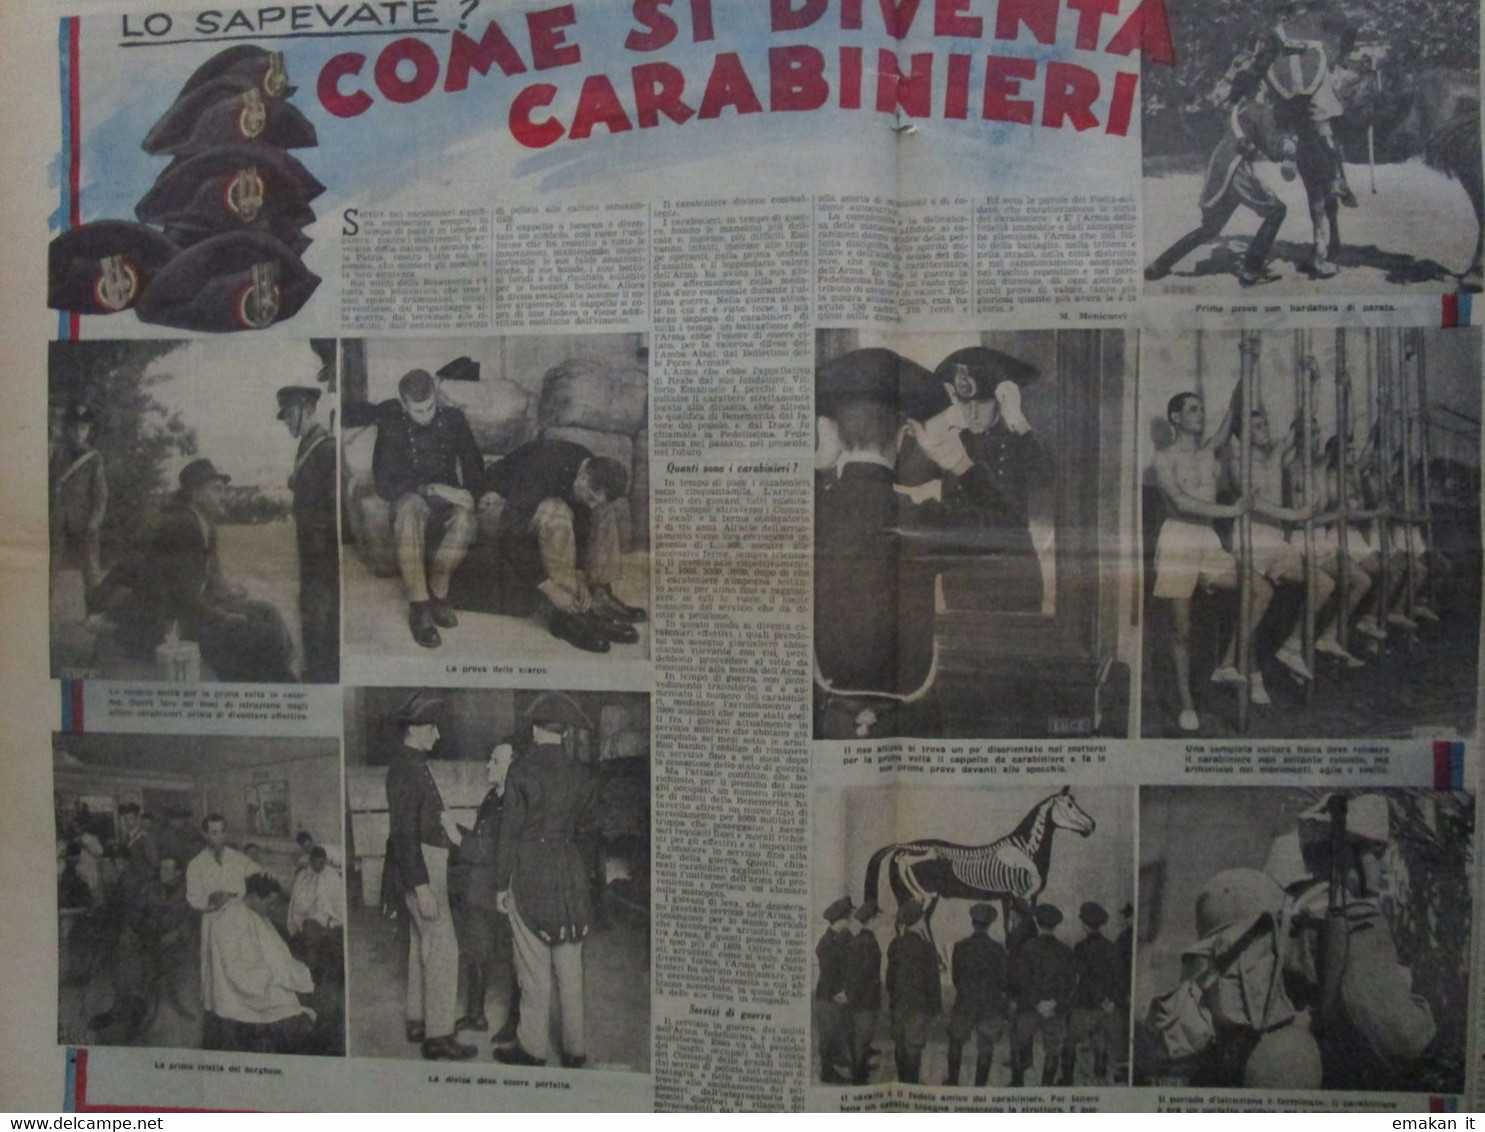 # DOMENICA DEL CORRIERE N 41 / 1941 TOBRUK / CARABINIERI / FRONTE RUSSO / GALILEO GALILEI - Premières éditions